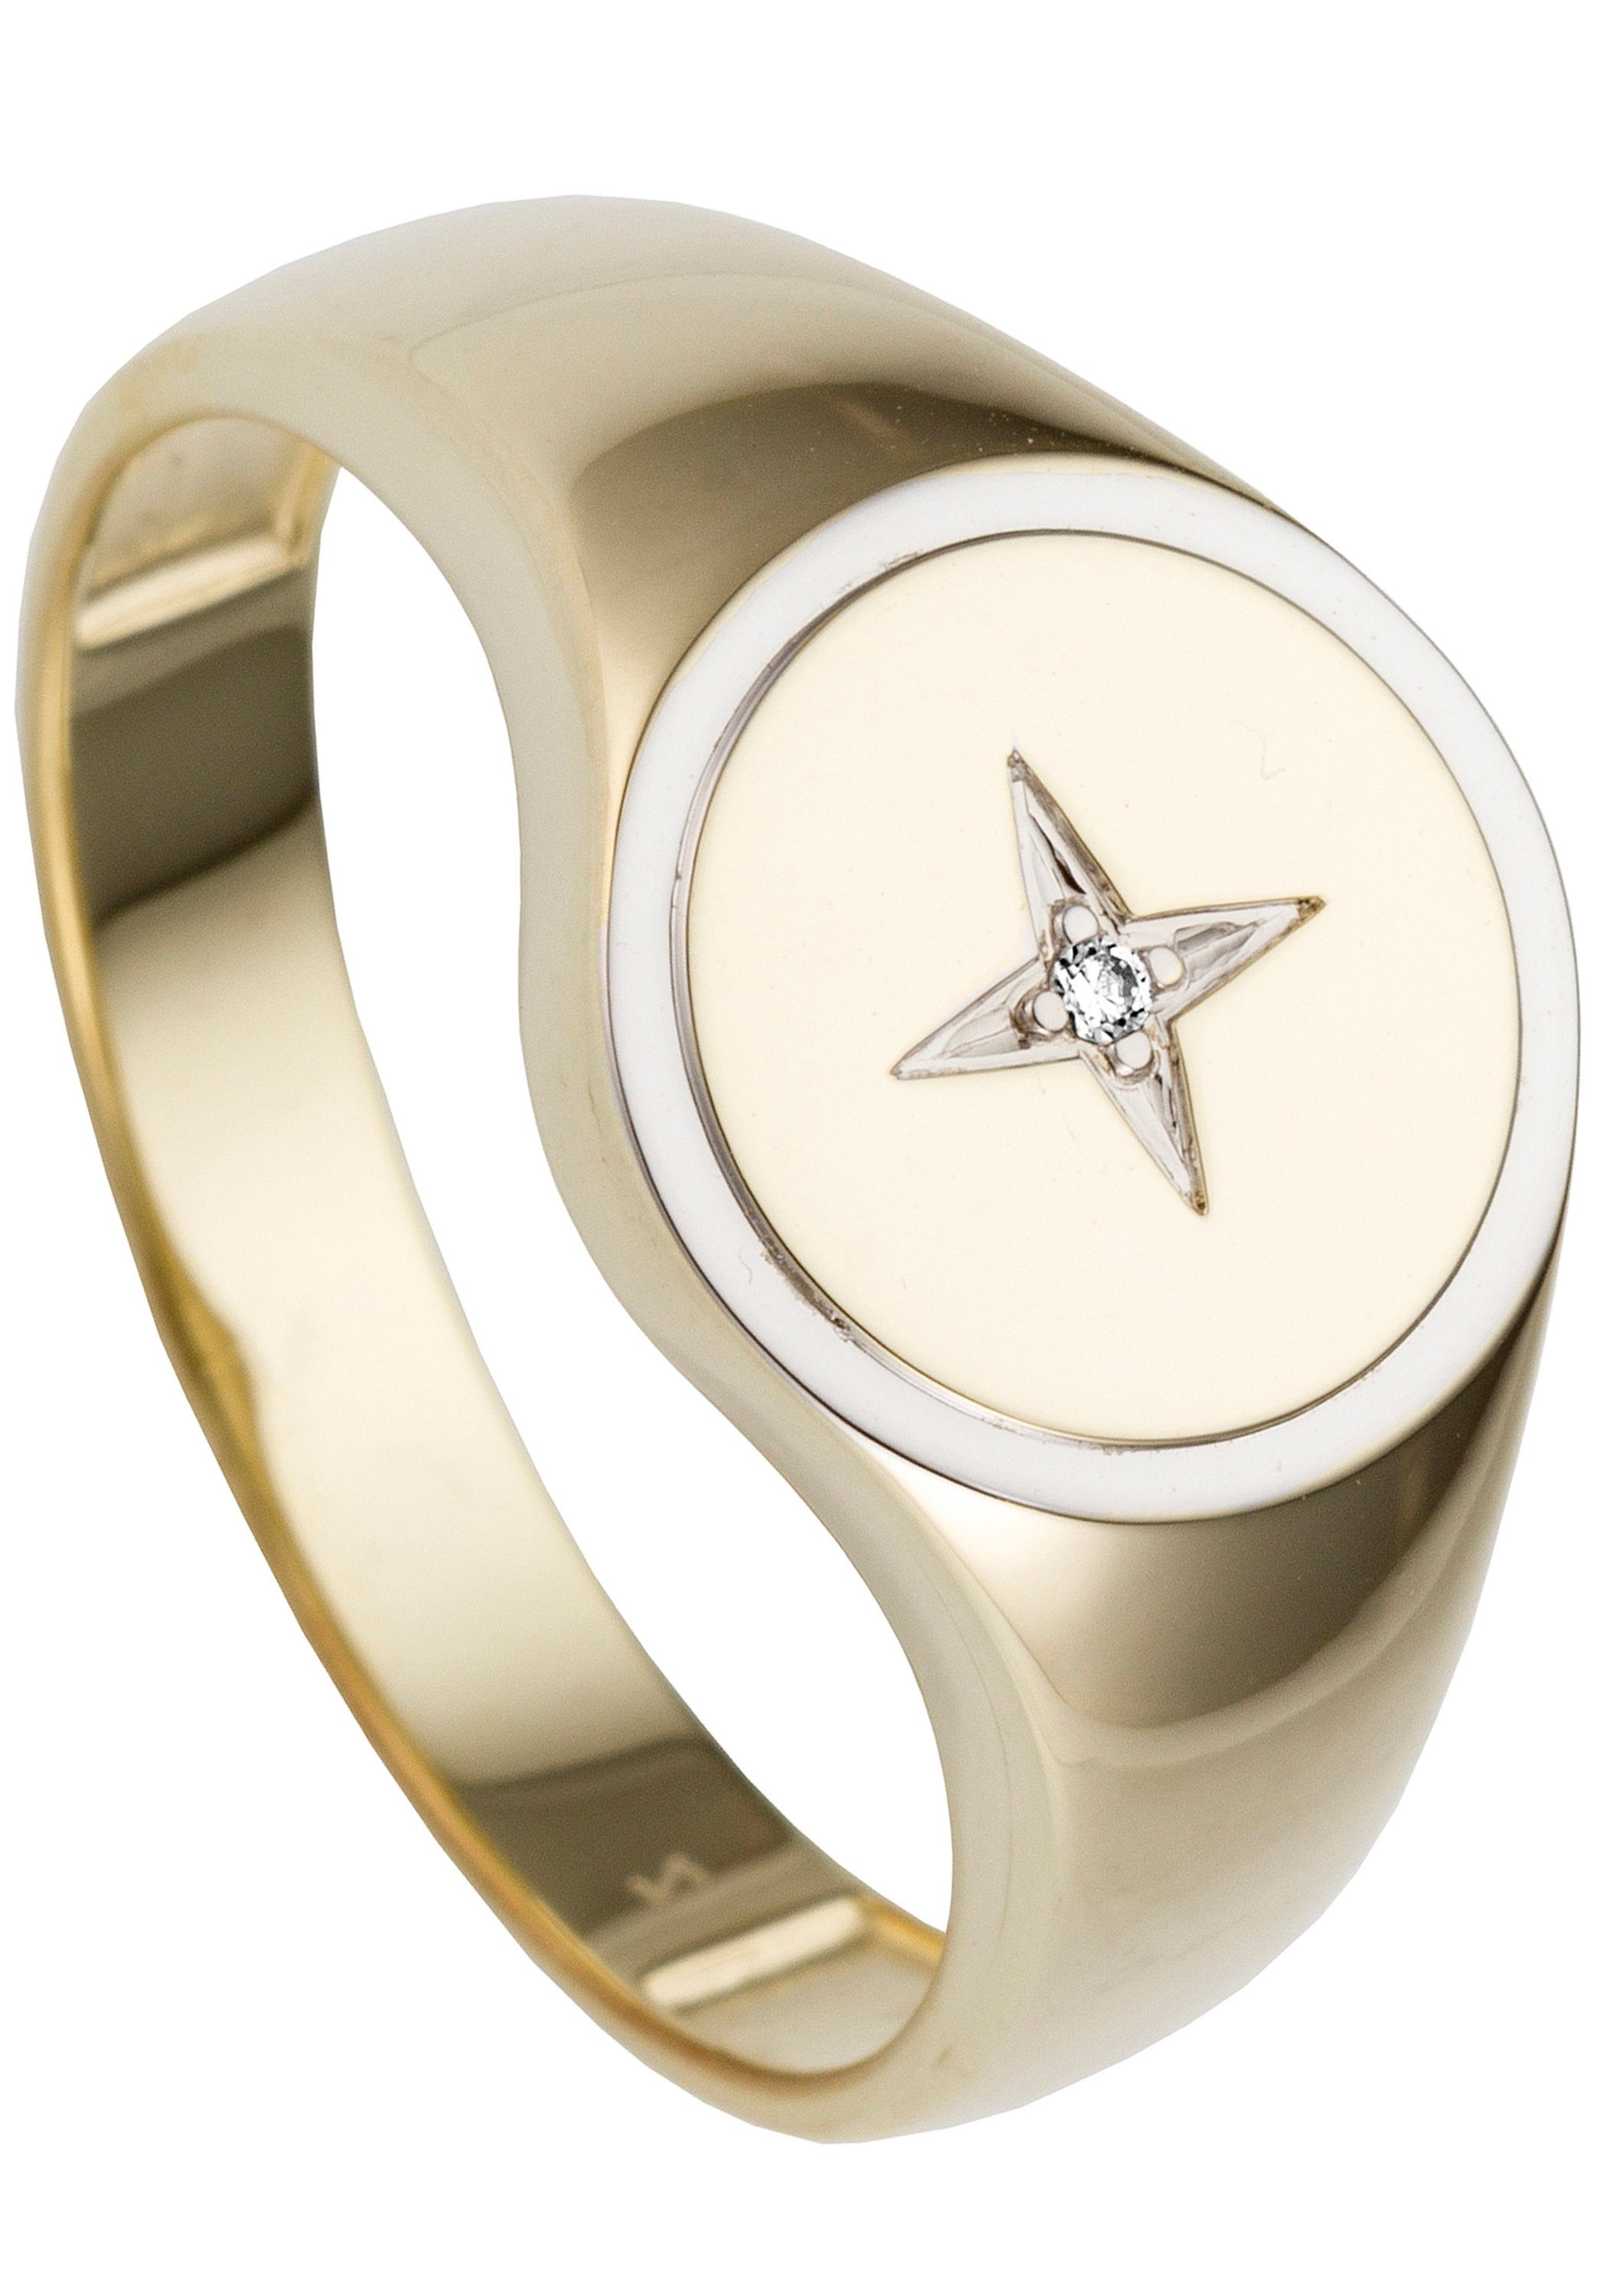 JOBO Fingerring Ring mit Diamant, bicolor Gold 585